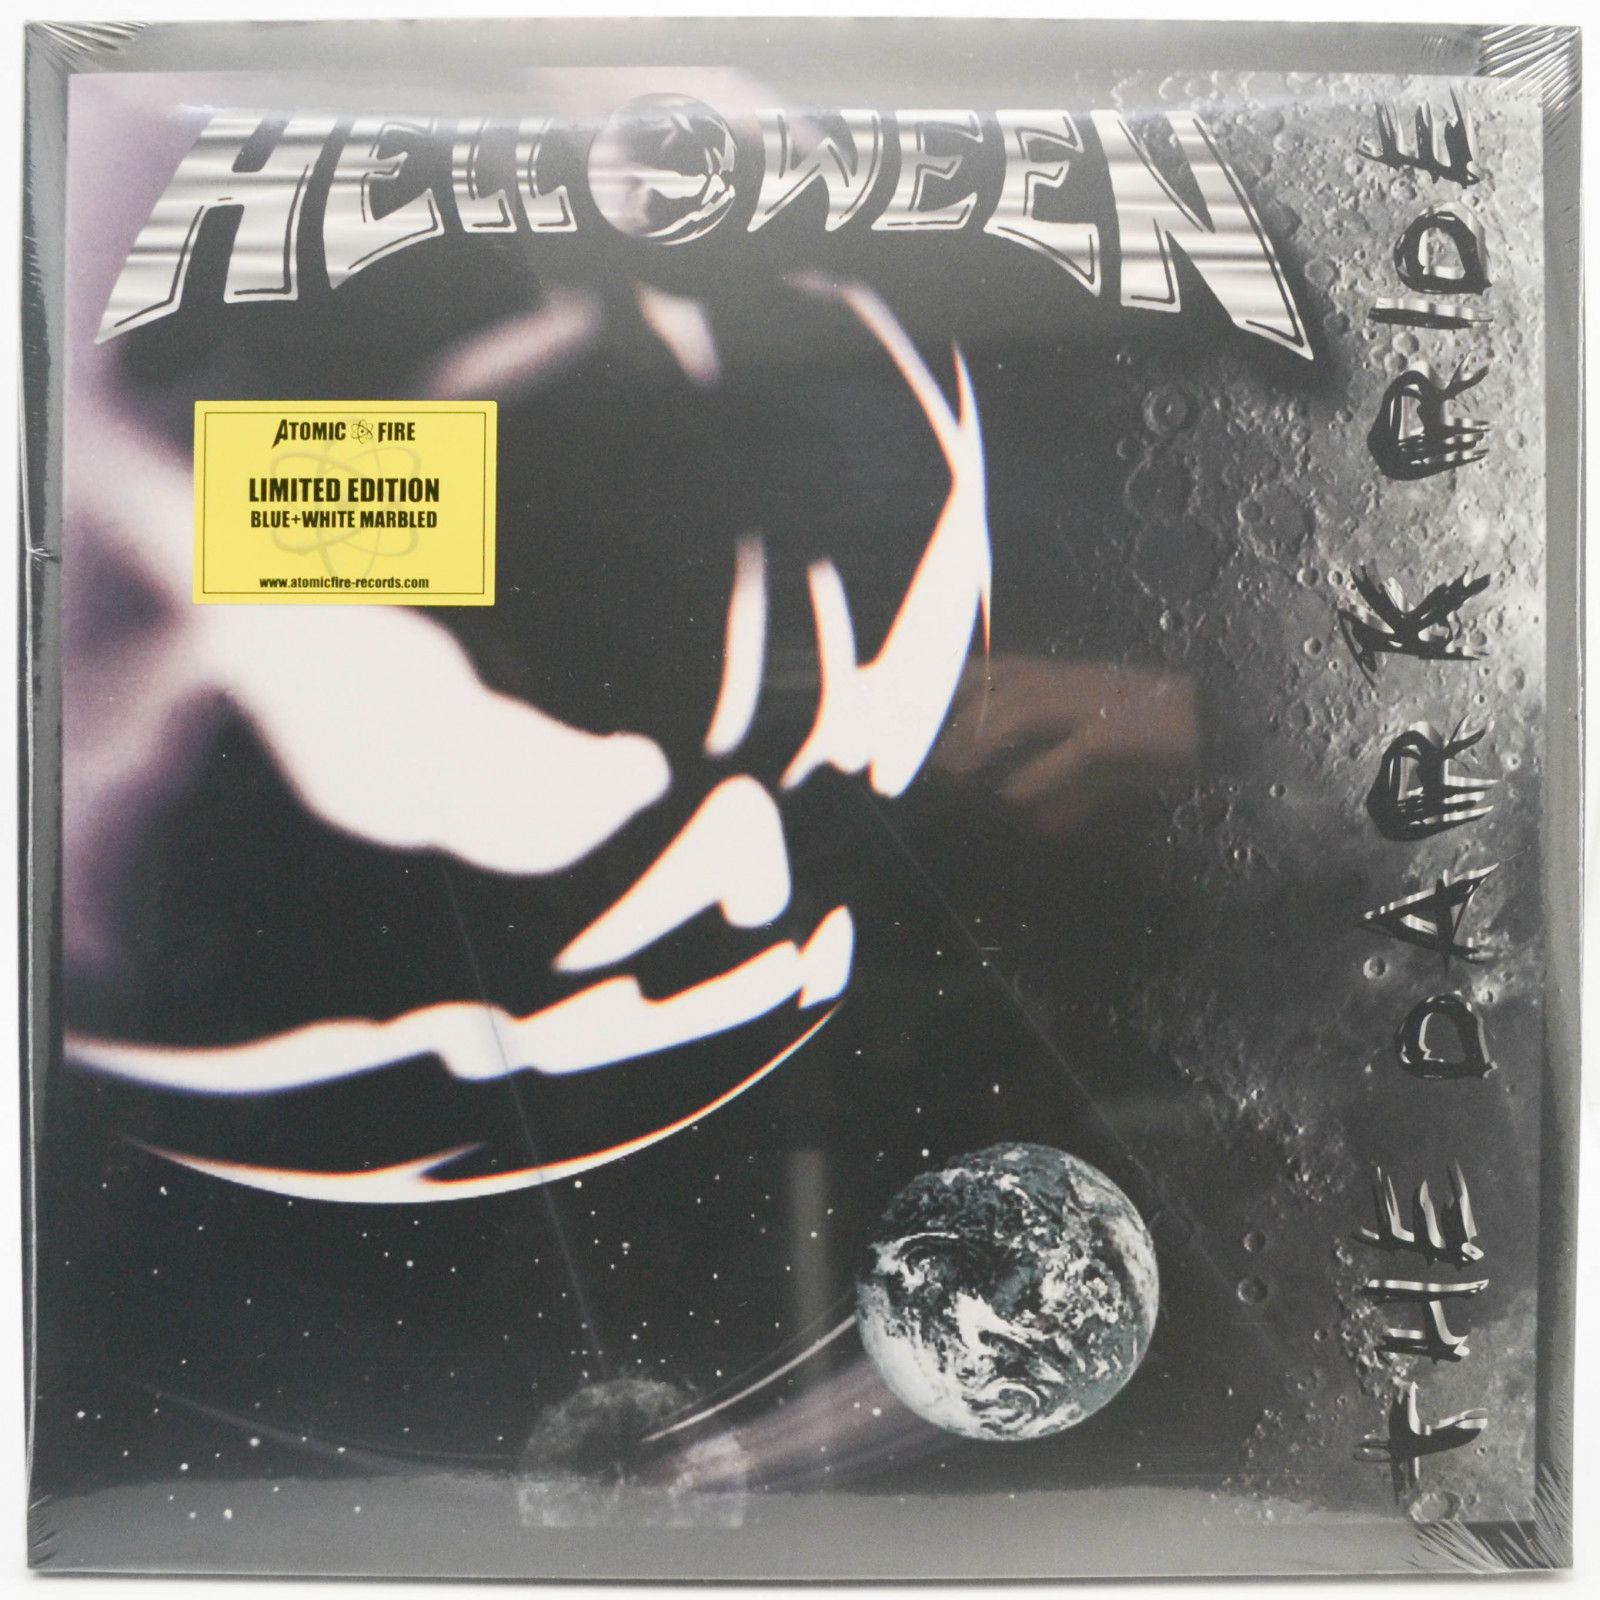 Helloween — The Dark Ride (2LP), 2000